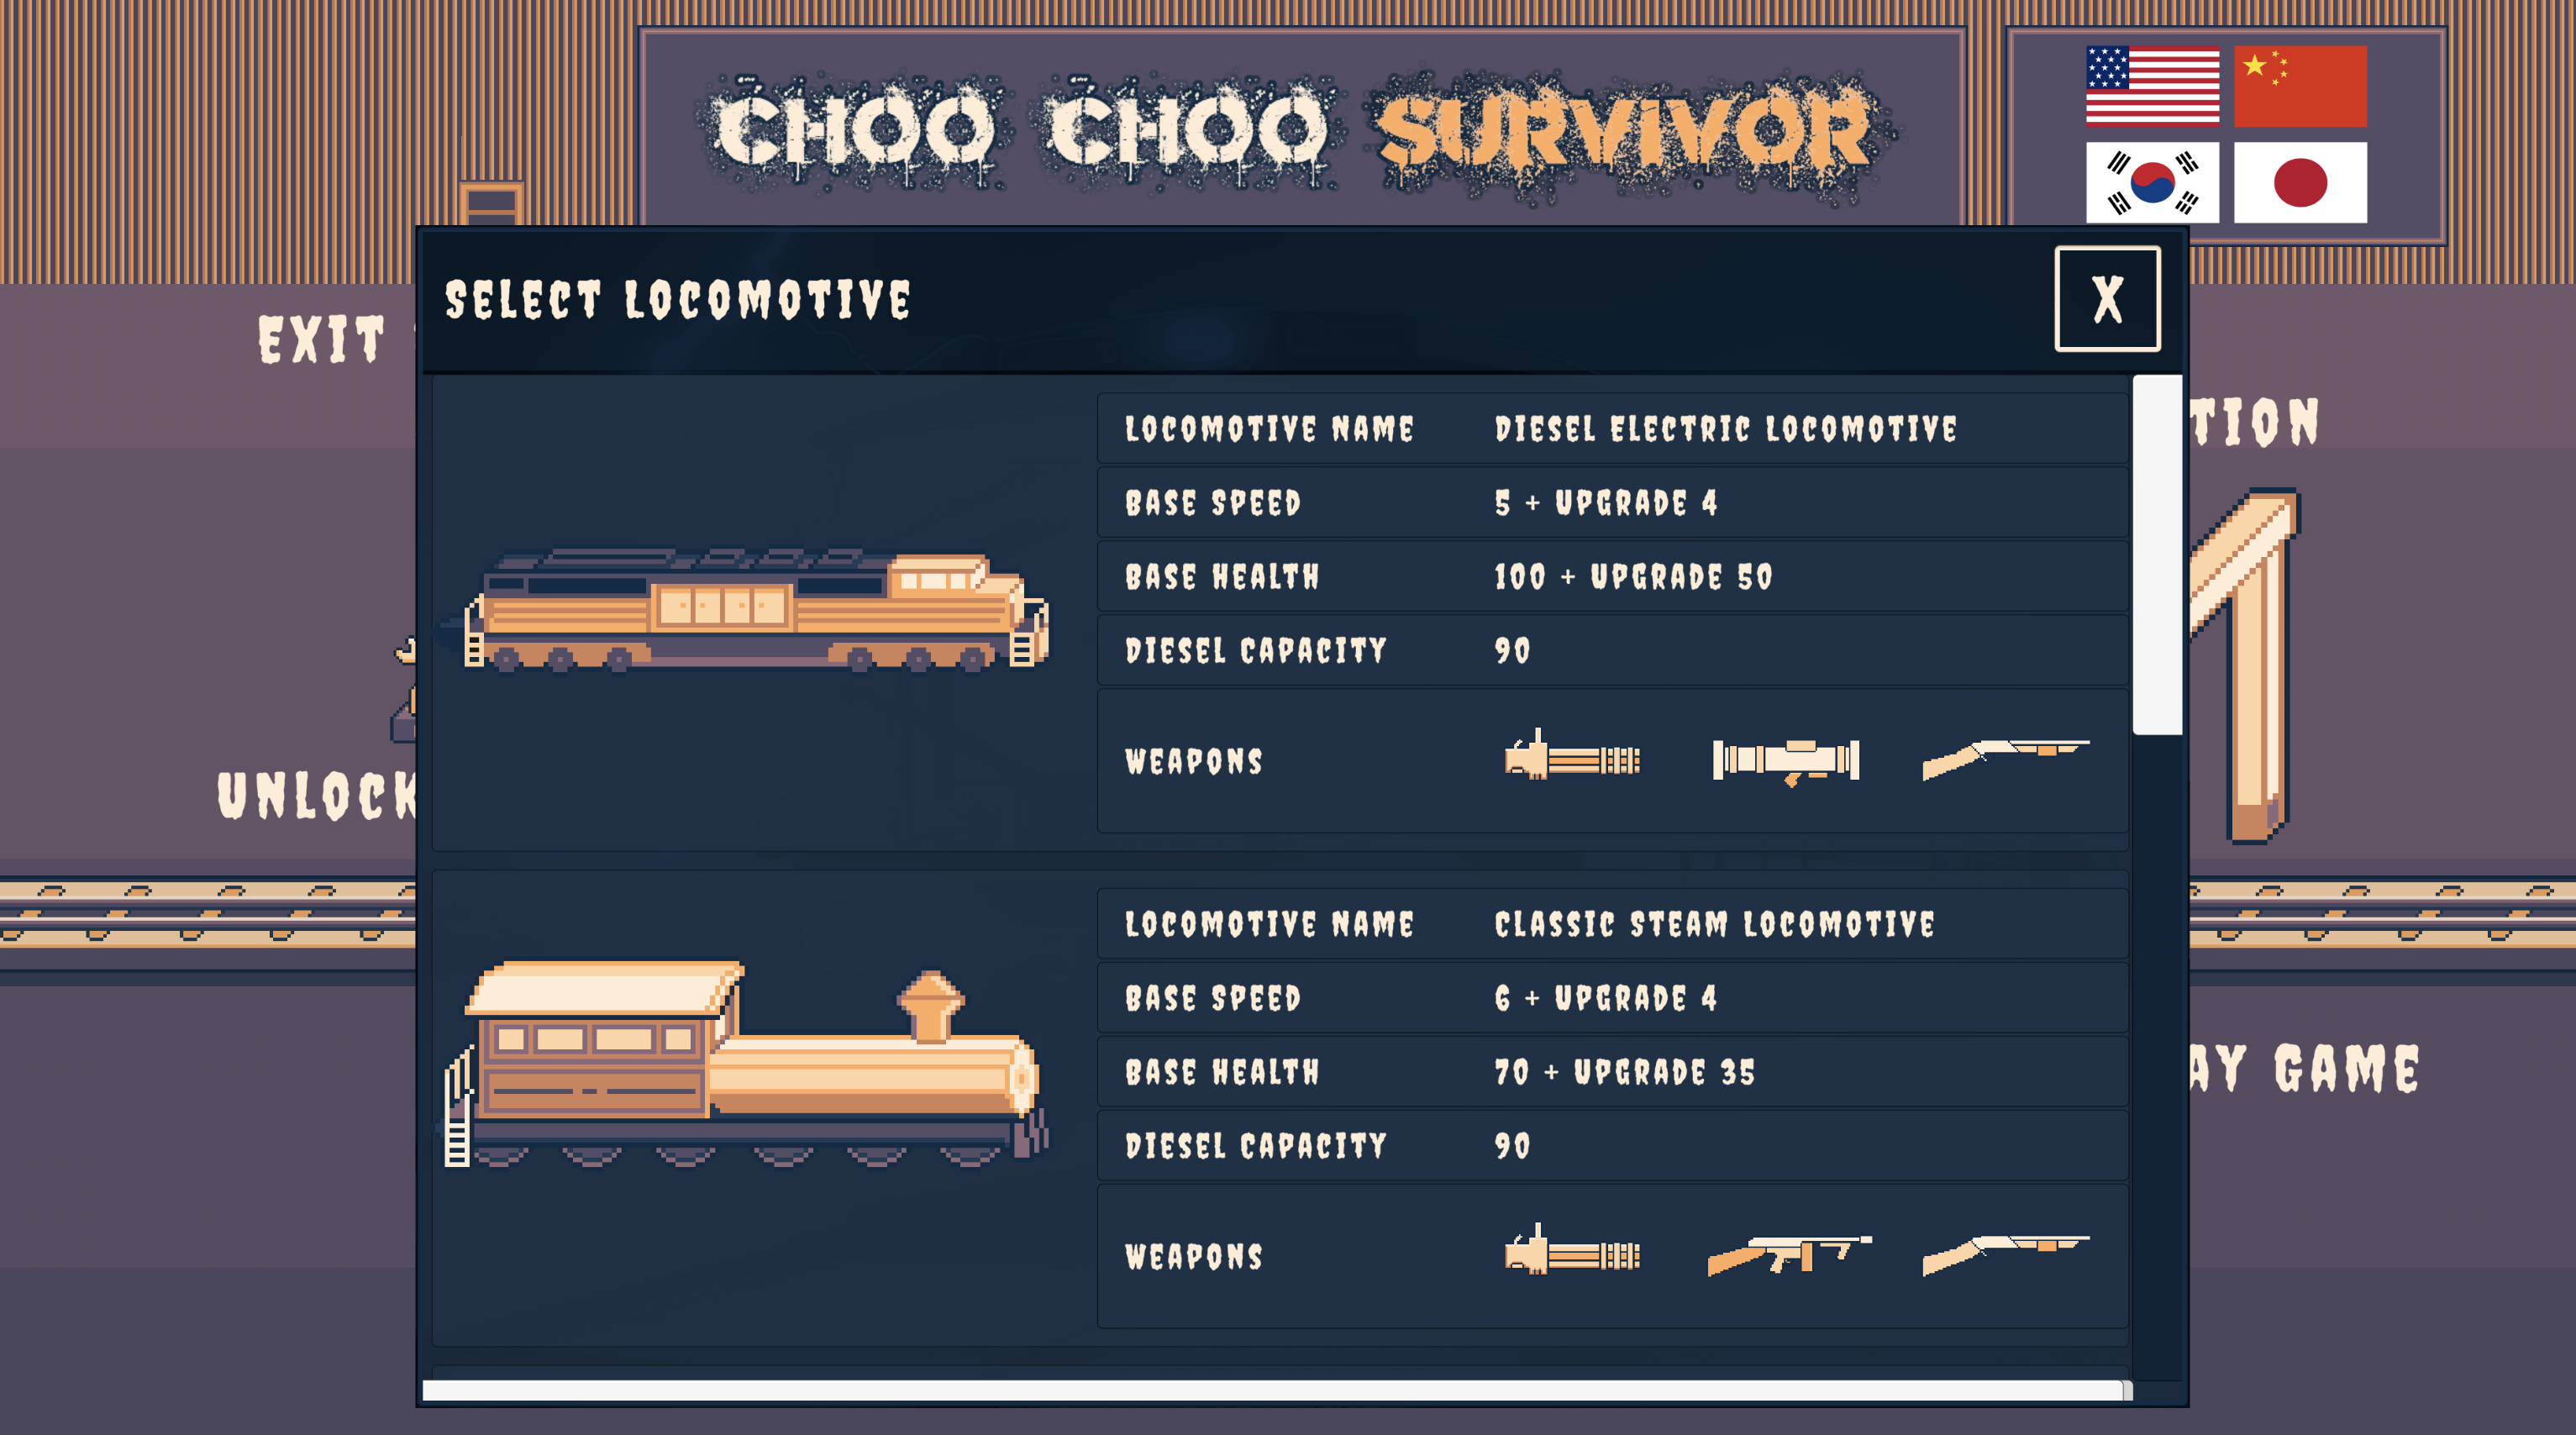 New select locomotive menu showi